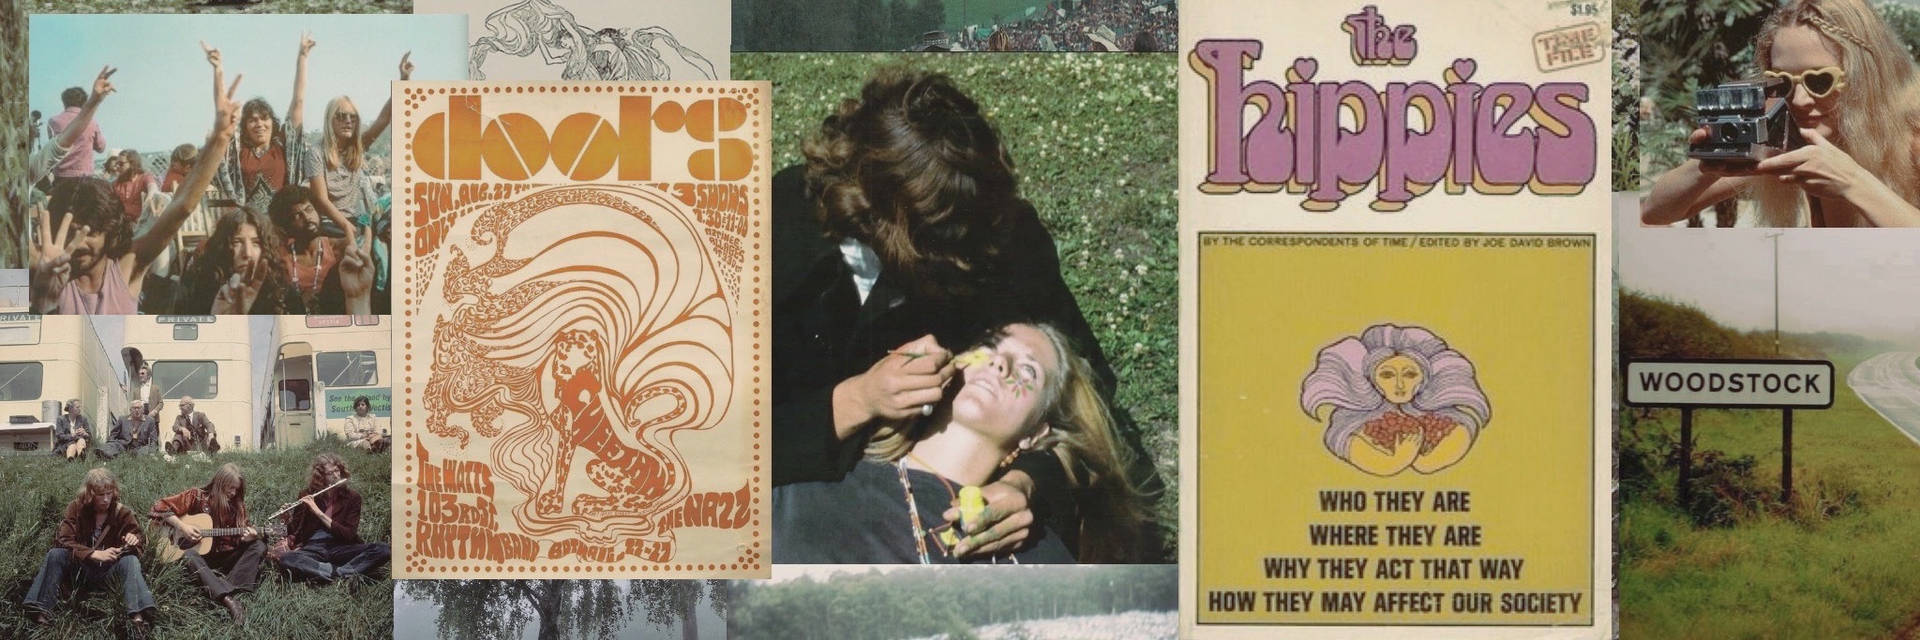 Top 999+ Woodstock Wallpaper Full HD, 4K Free to Use